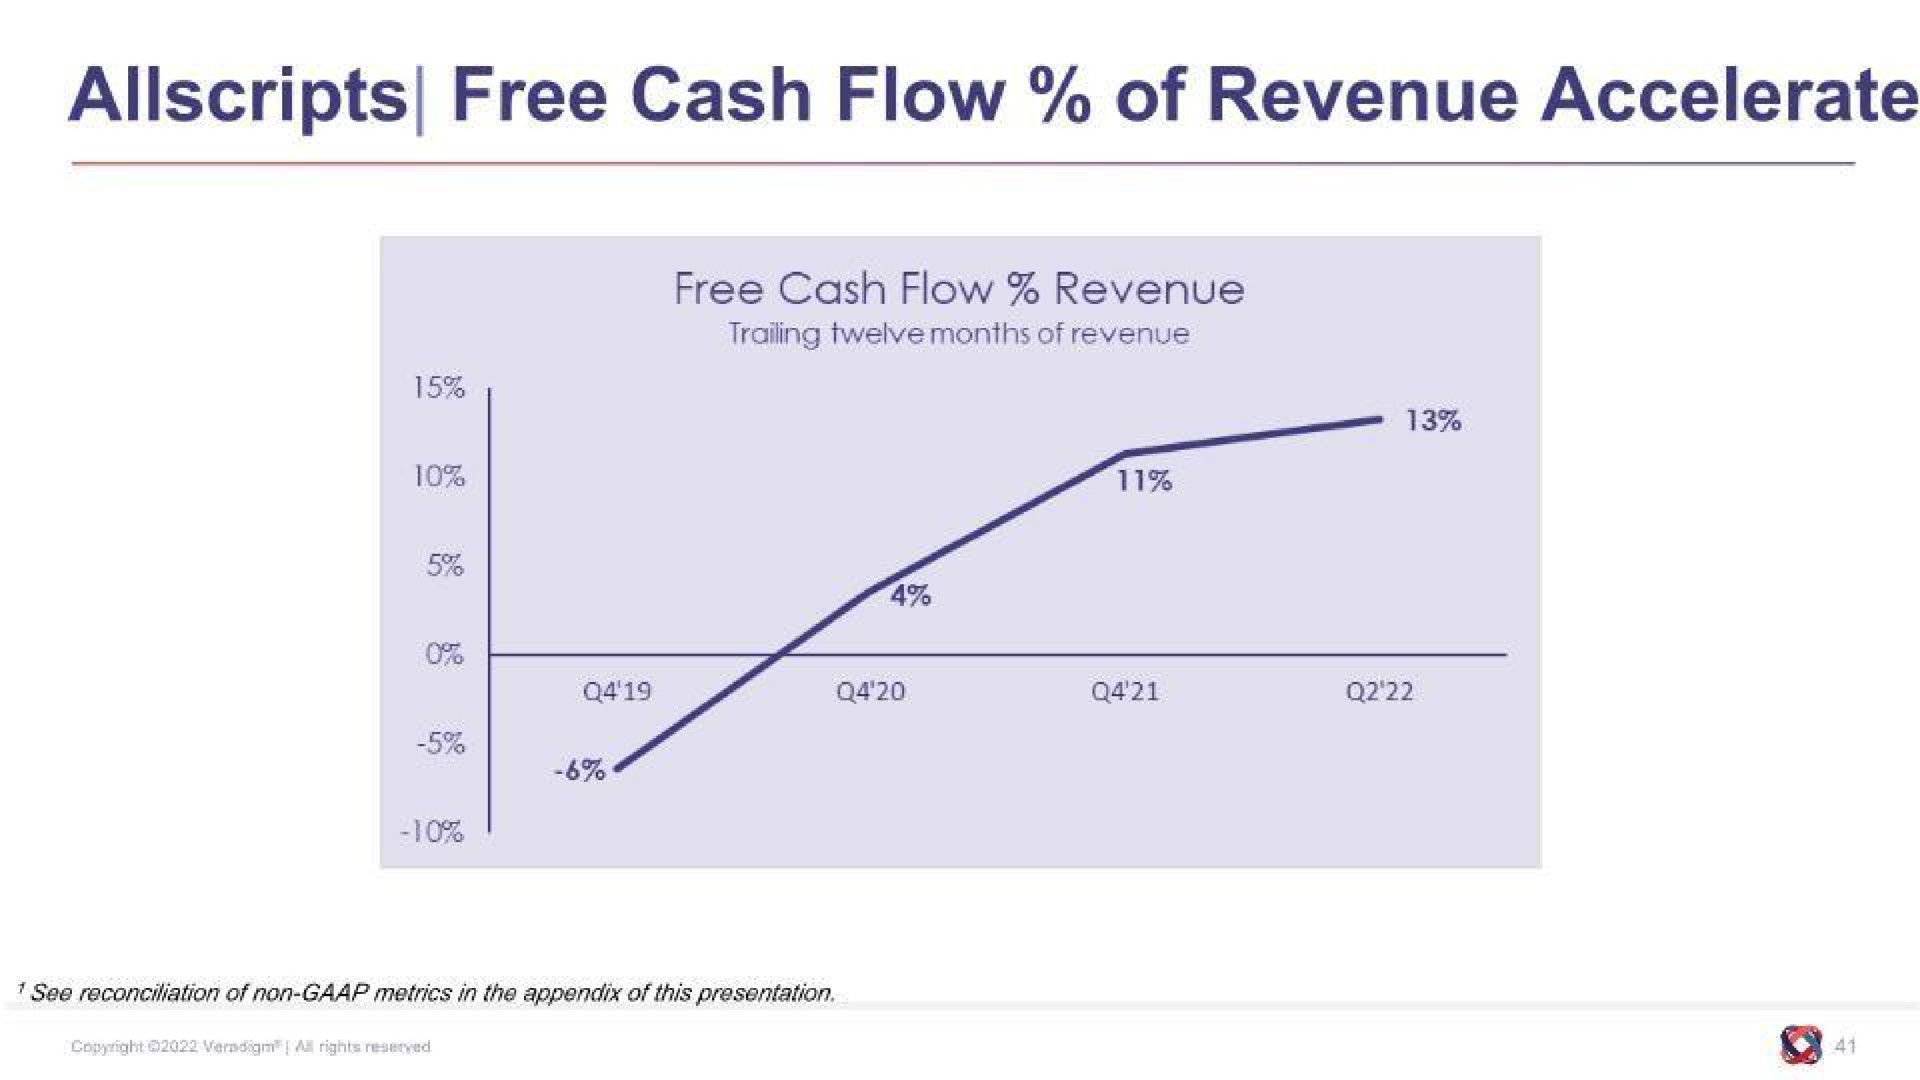 free cash flow of revenue accelerate | Allscripts Healthcare Solutions